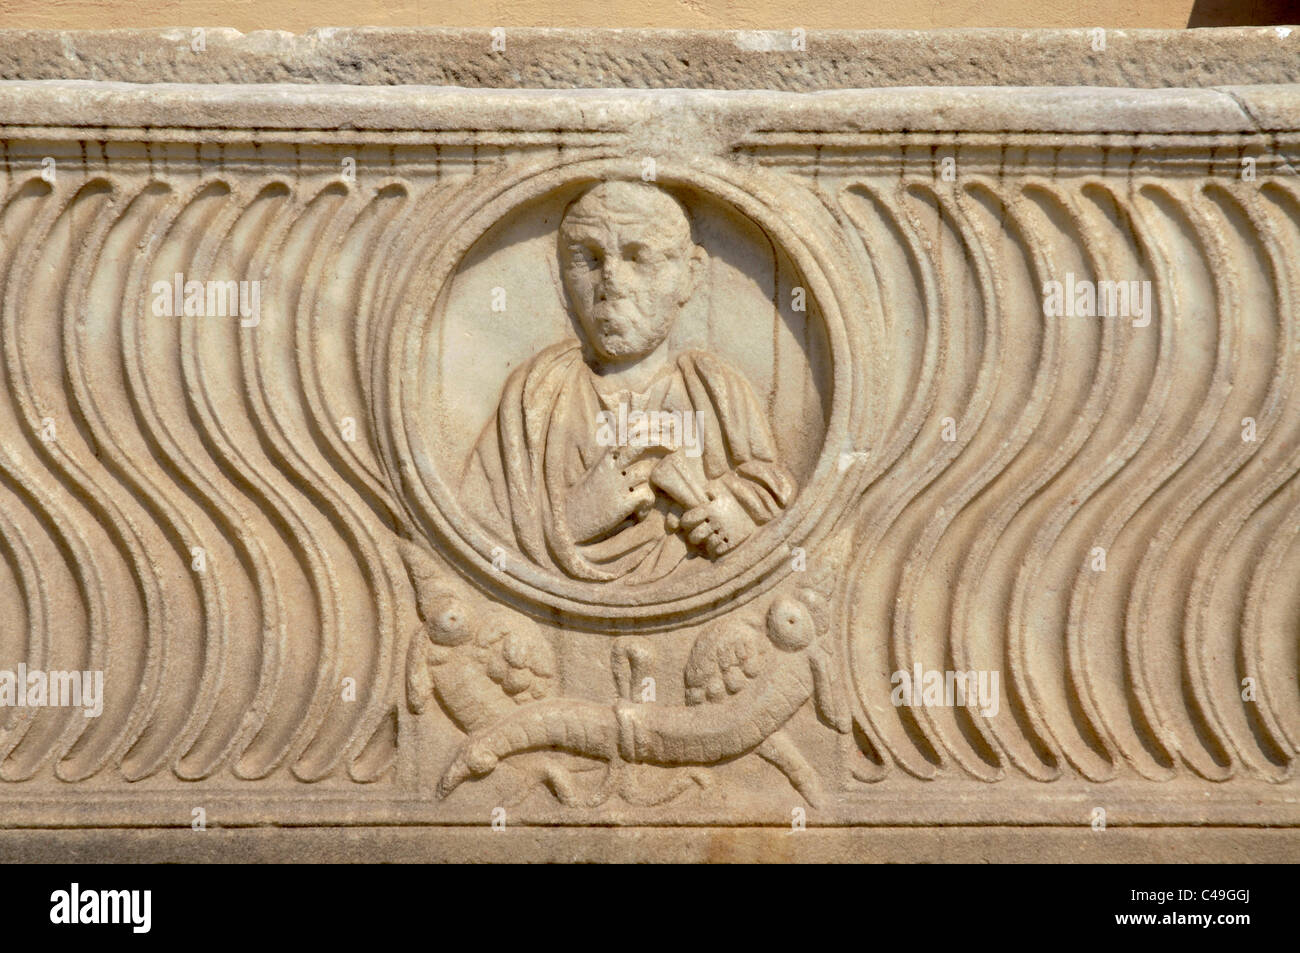 Portrait and decoration on a Roman sarcophagus Stock Photo